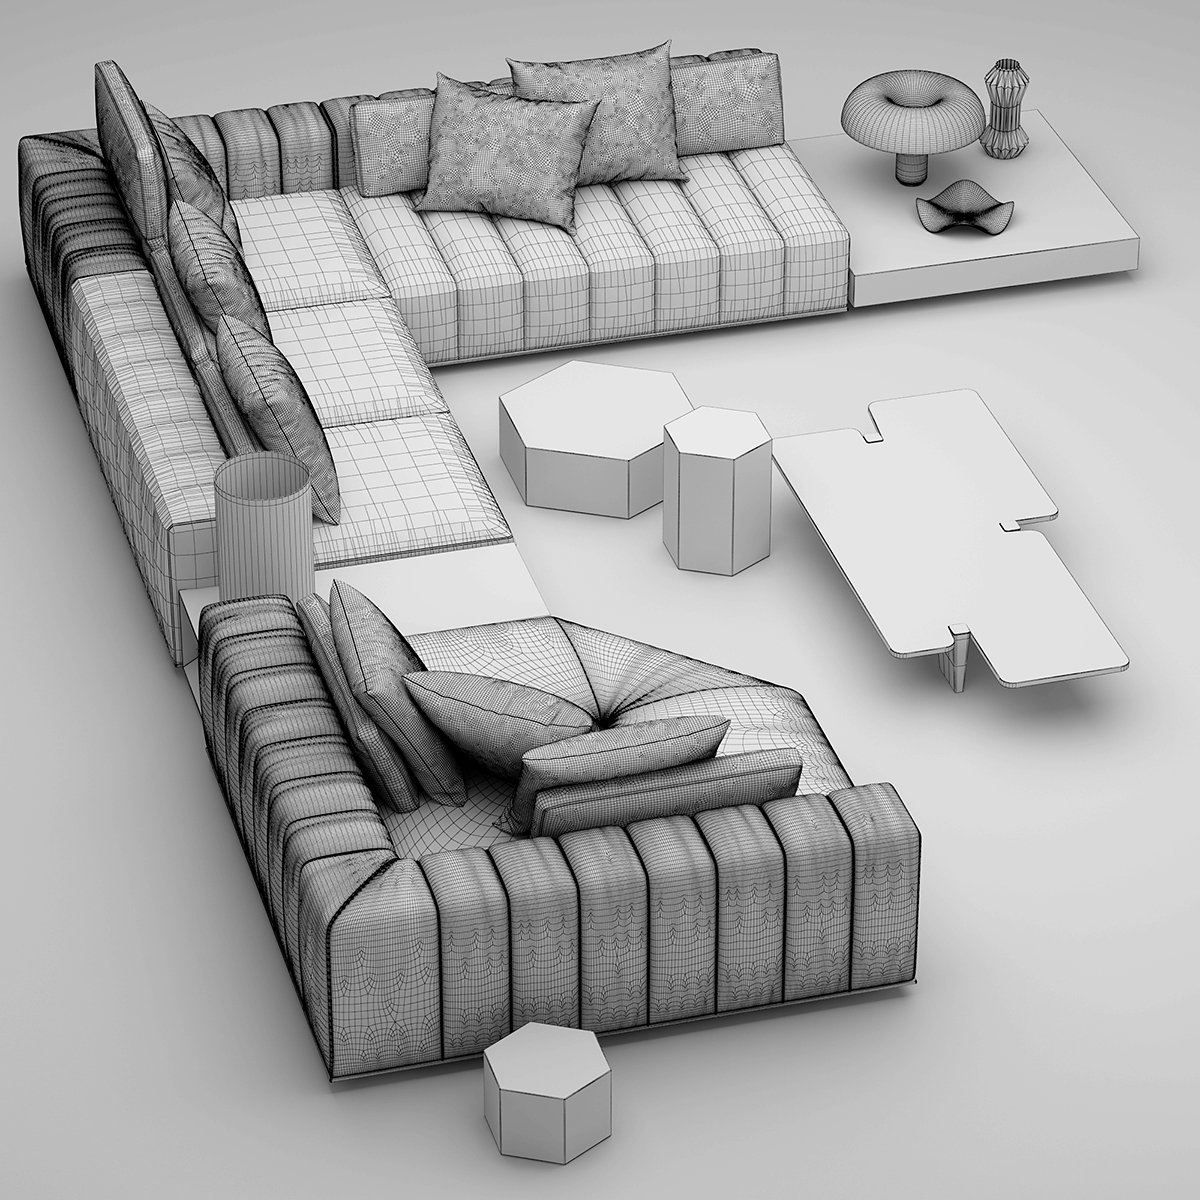 Мебель три дивана. Диван Minotti Freeman. 3d модели для 3ds Max мебель. Моделирование 3д Макс диванов референсы. Minotti uglovoy Divan.